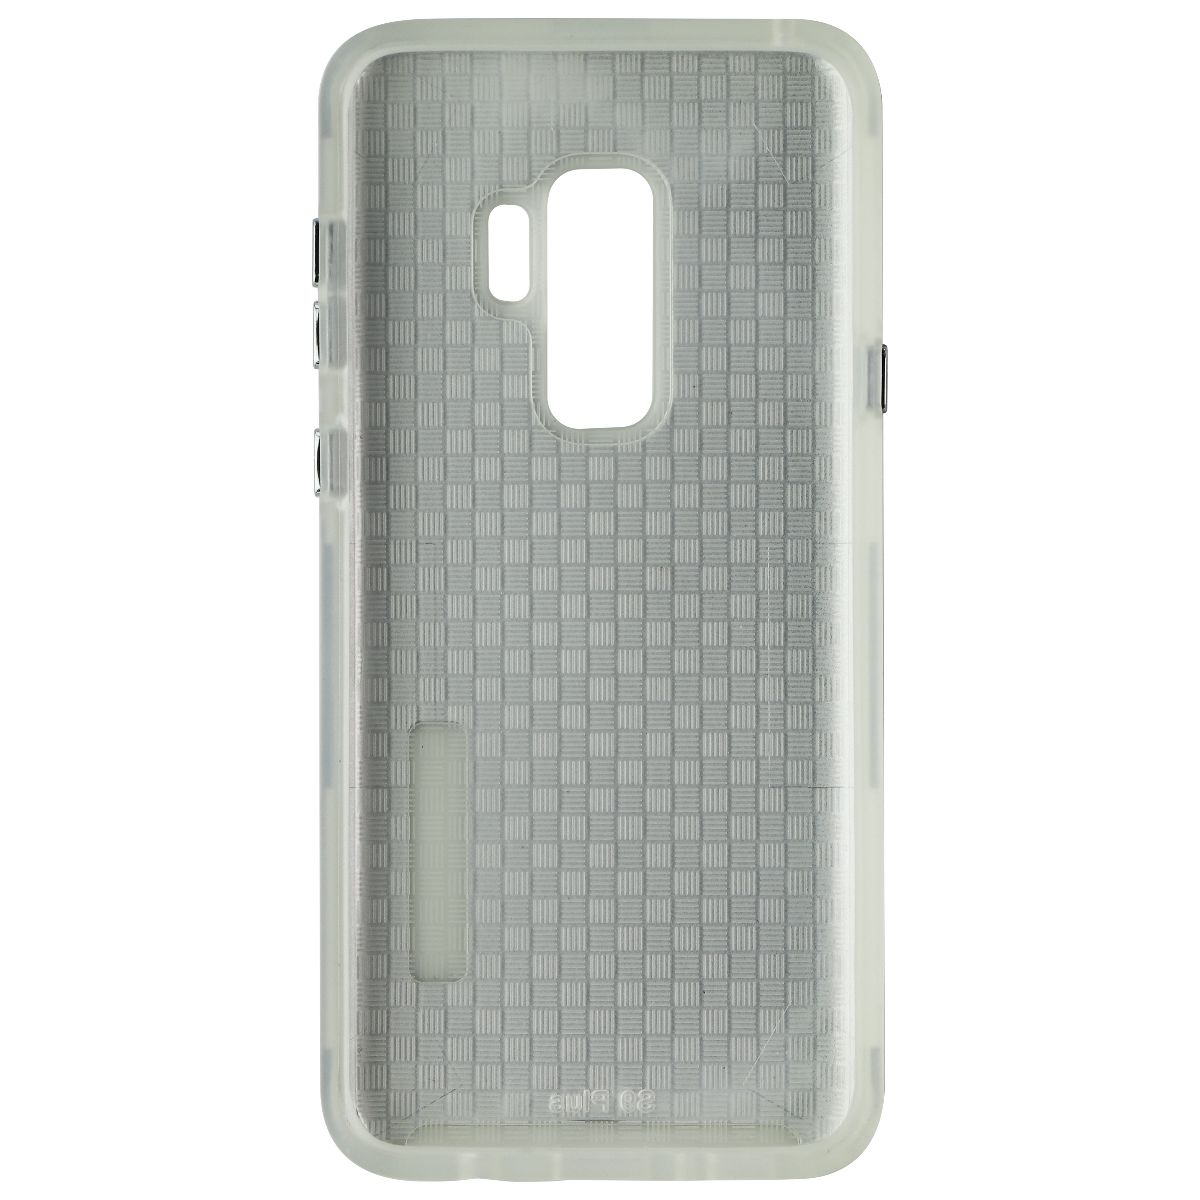 MyBat Advanced Armor Series Case For Samsung Galaxy S9+ (Plus) - Silver / Gray (Refurbished)